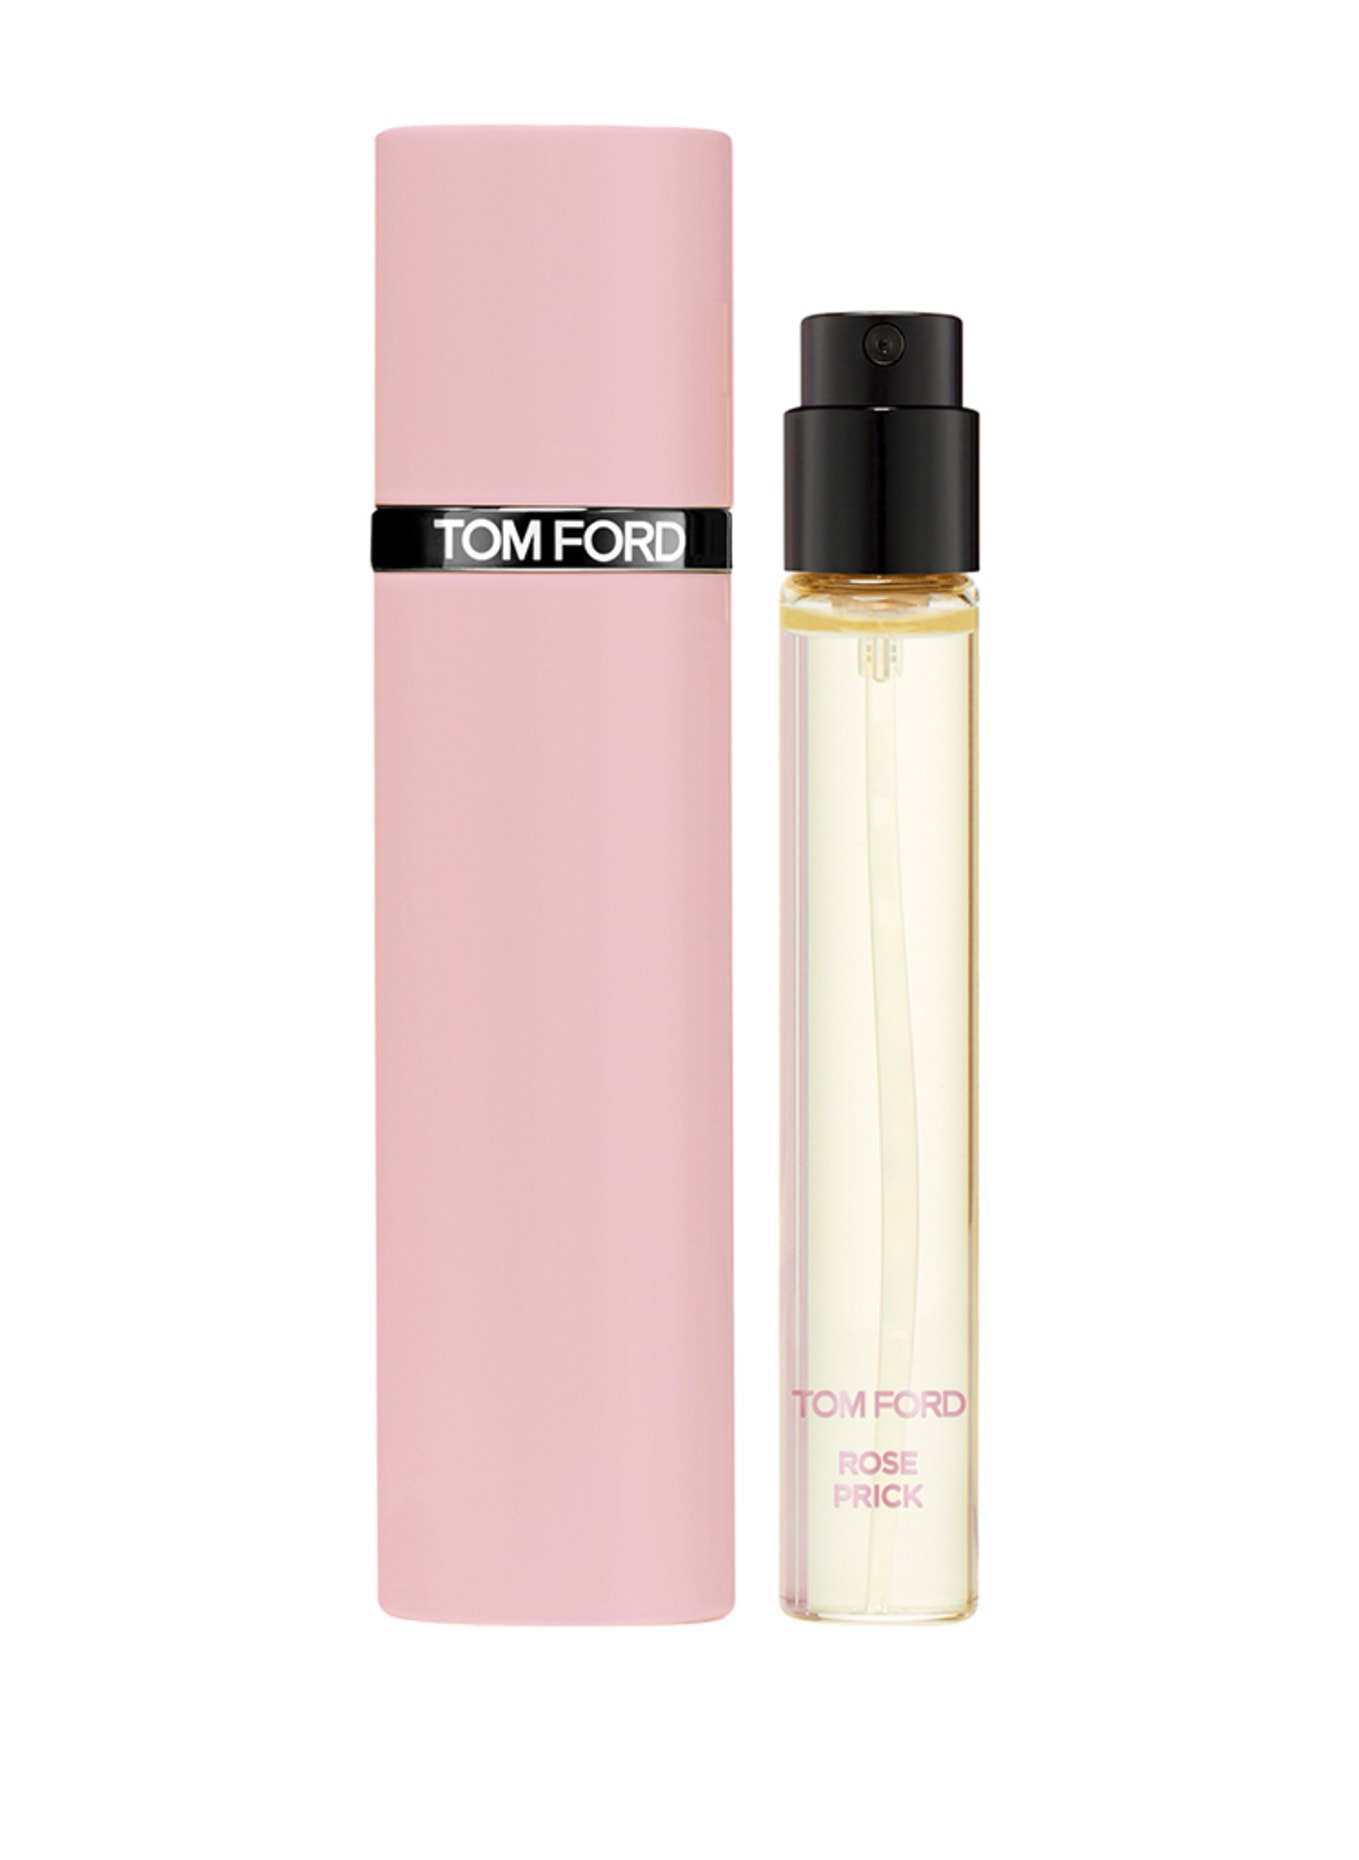 TOM FORD BEAUTY ROSE PRICK ATOMIZER (Obrazek 1)